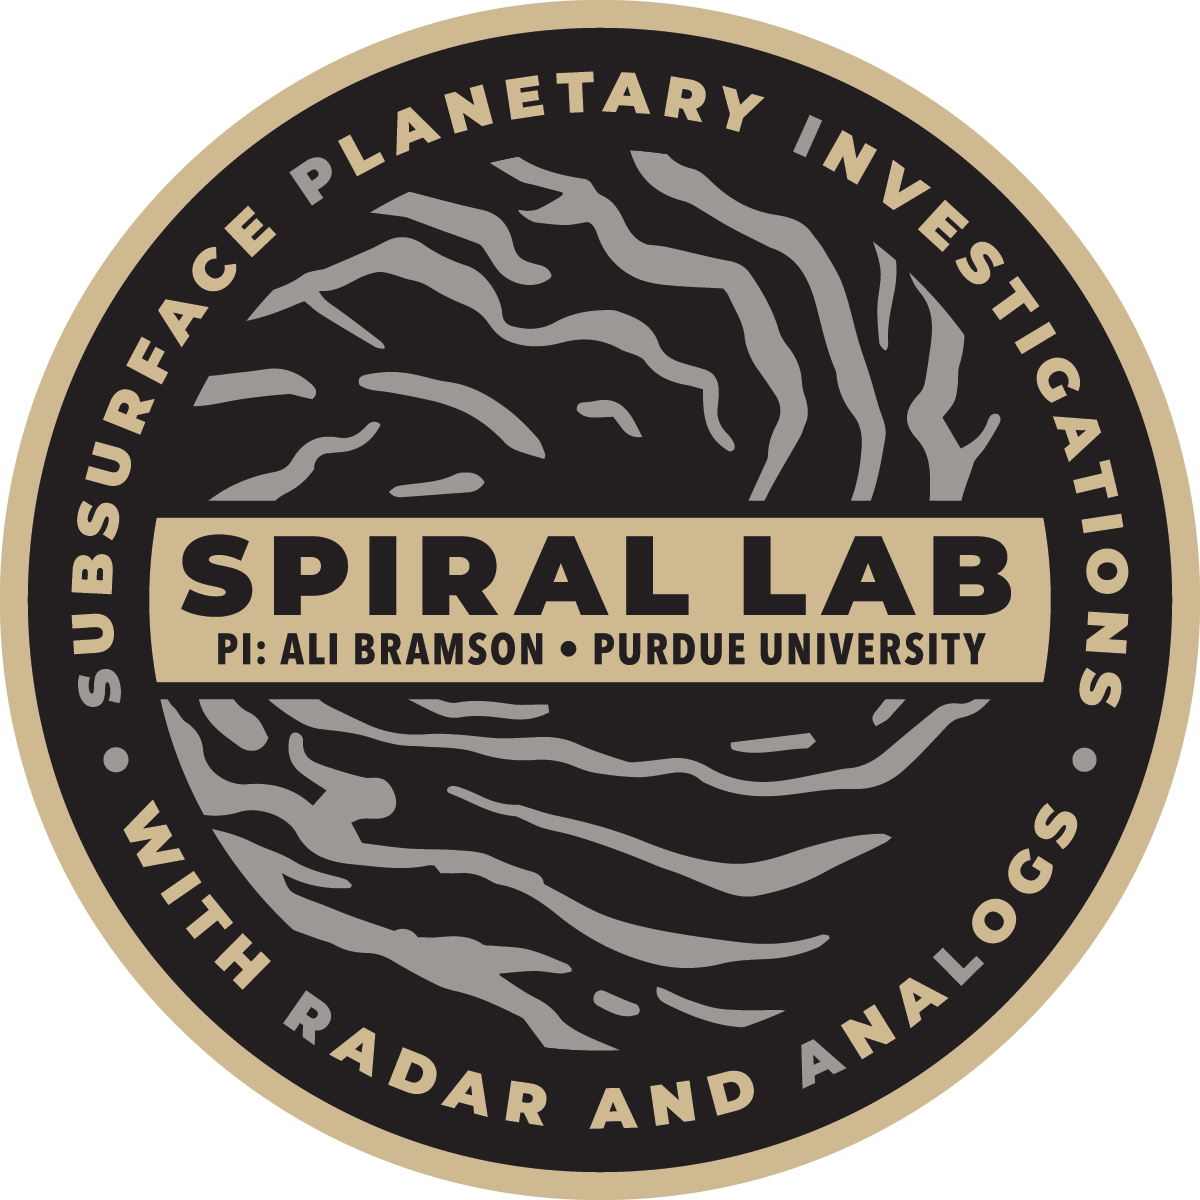 SPIRAL Lab Logo - circle shape with Mars polar spiral troughs and acronym around edges